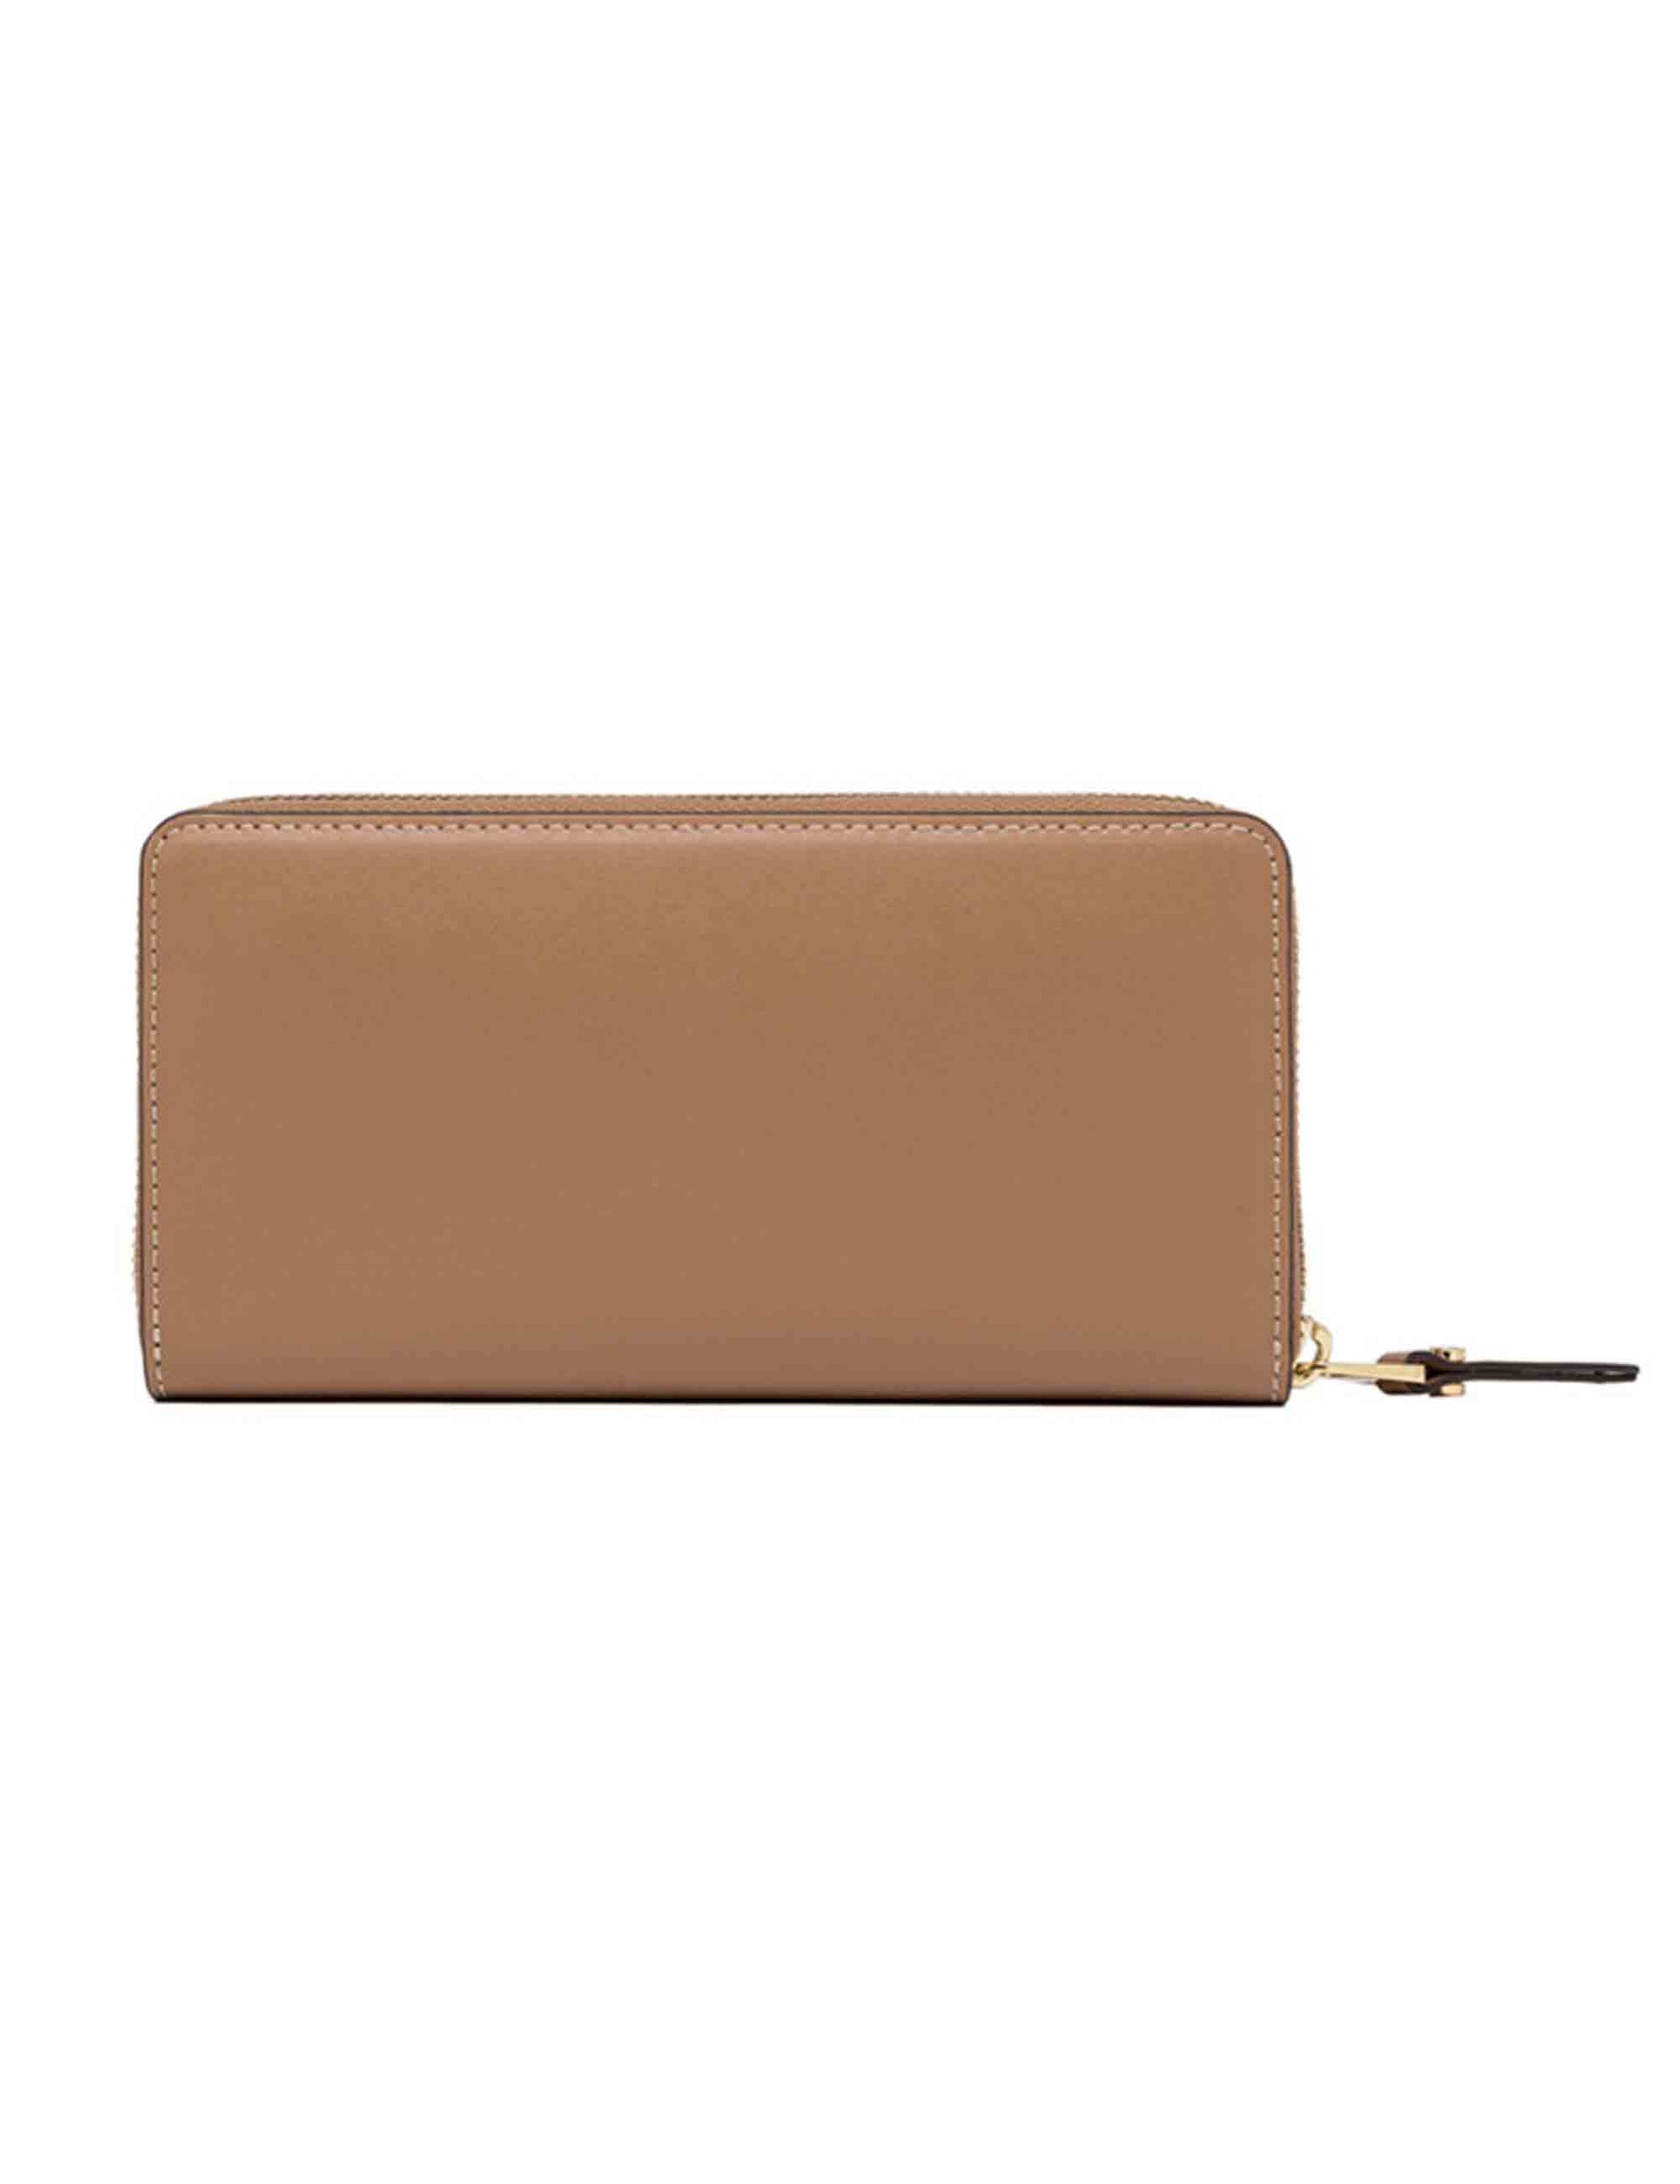 Women's wallet in tan leather with zip